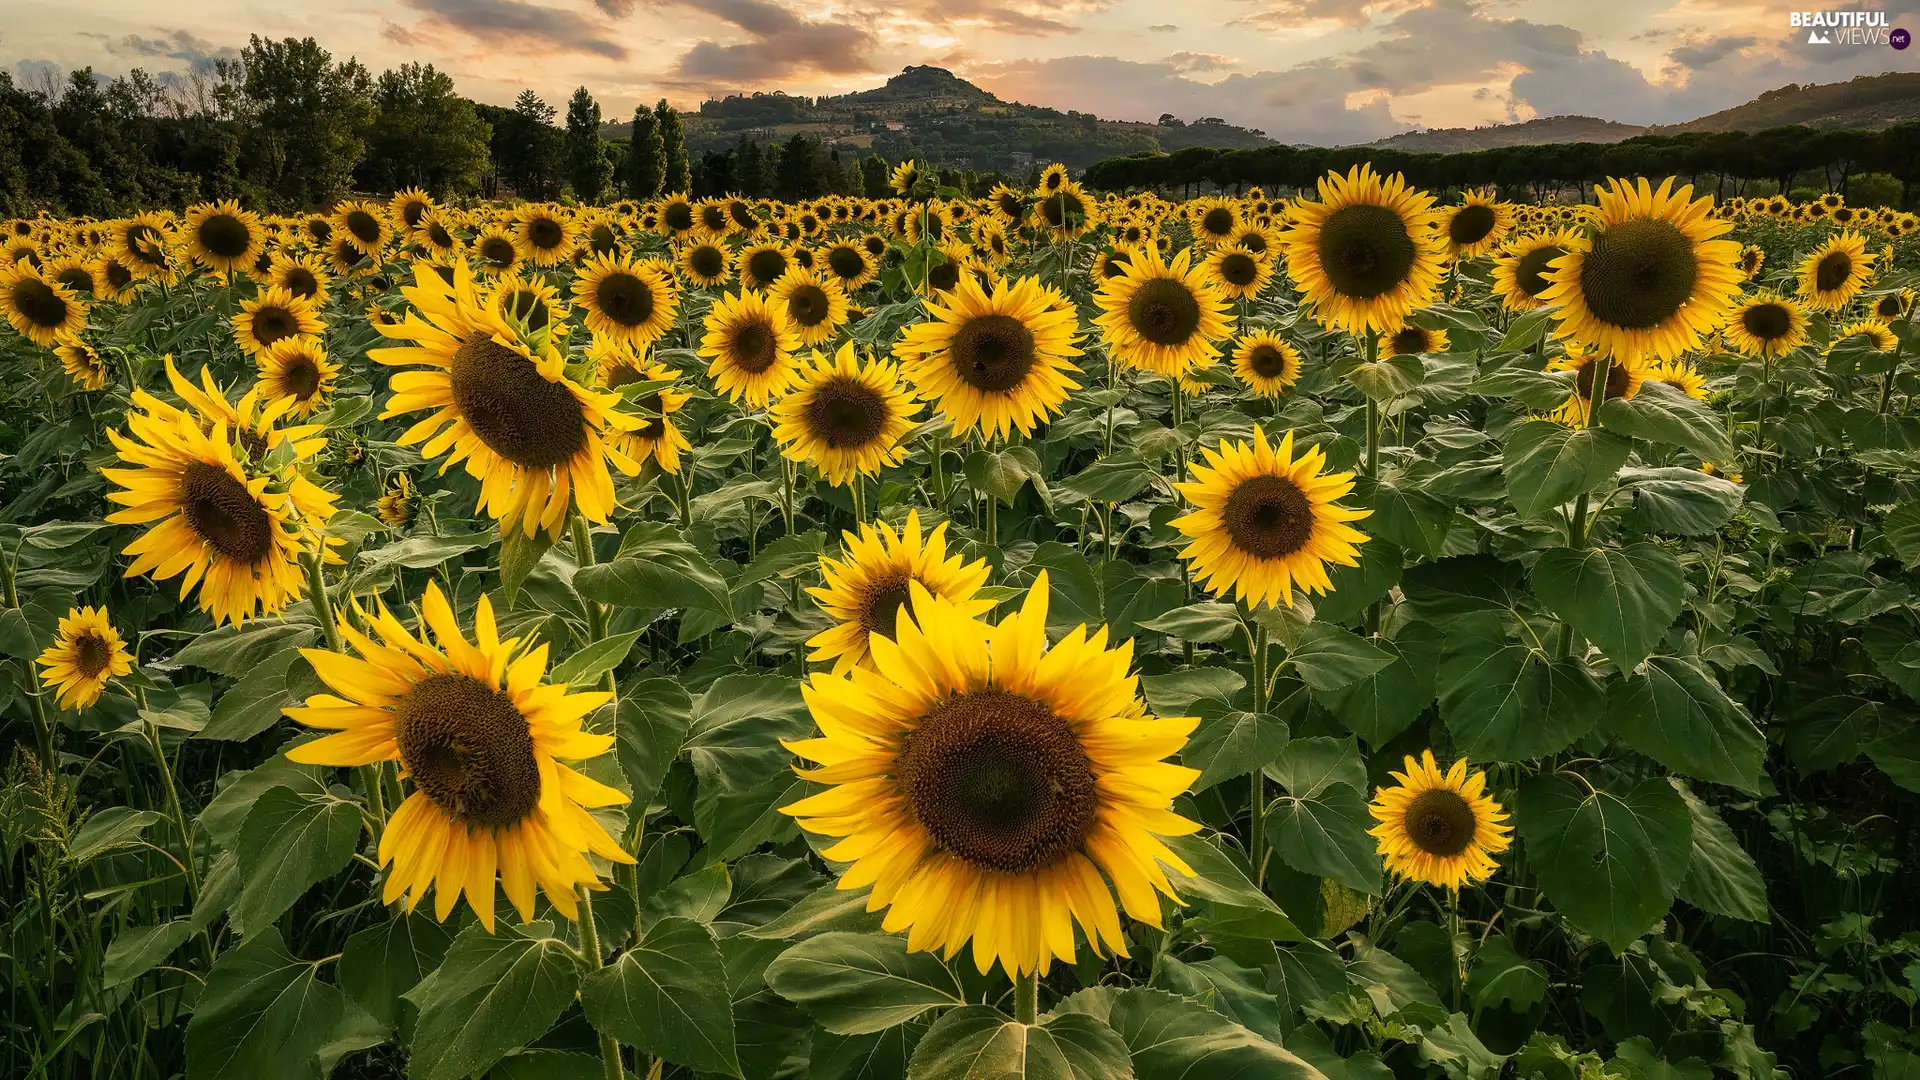 The Hills, Field, Nice sunflowers